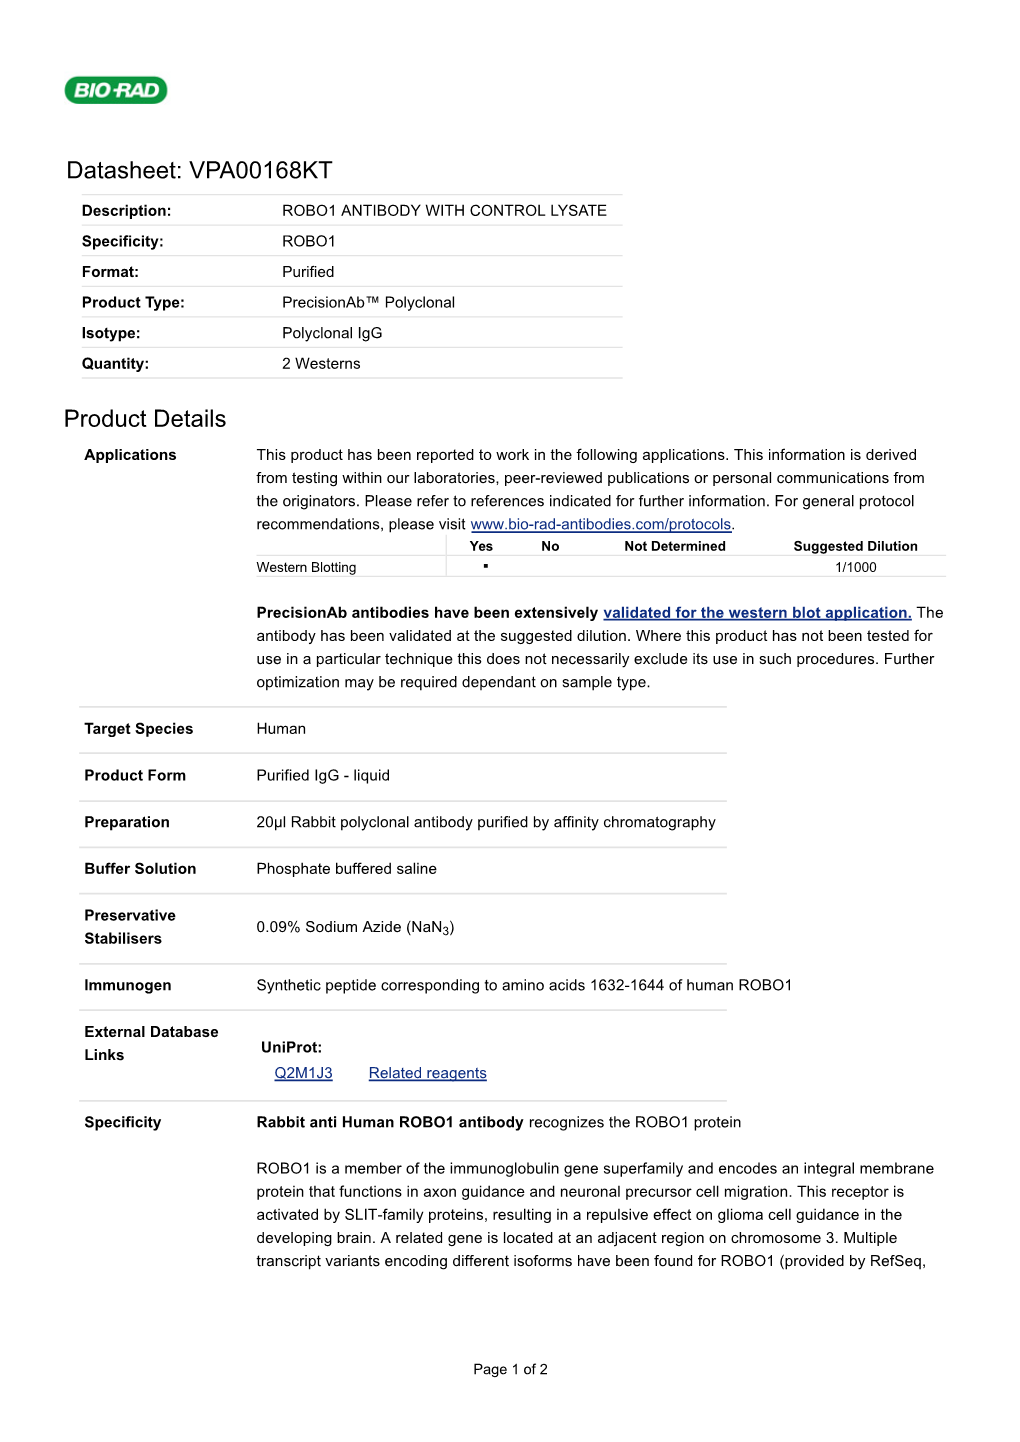 Datasheet: VPA00168KT Product Details